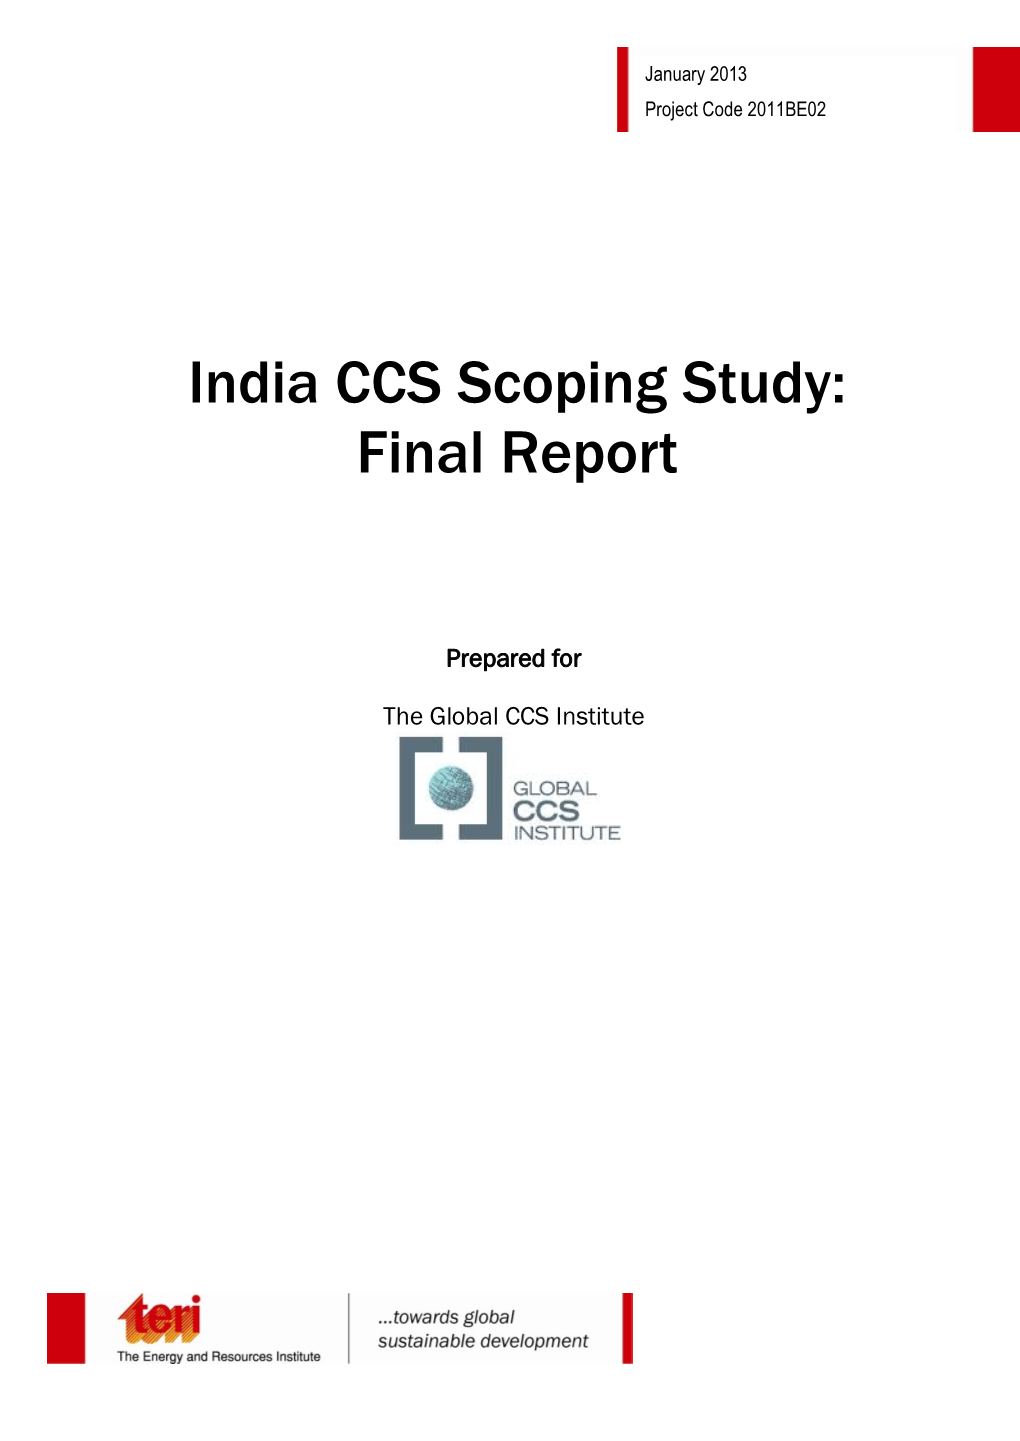 India CCS Scoping Study: Final Report